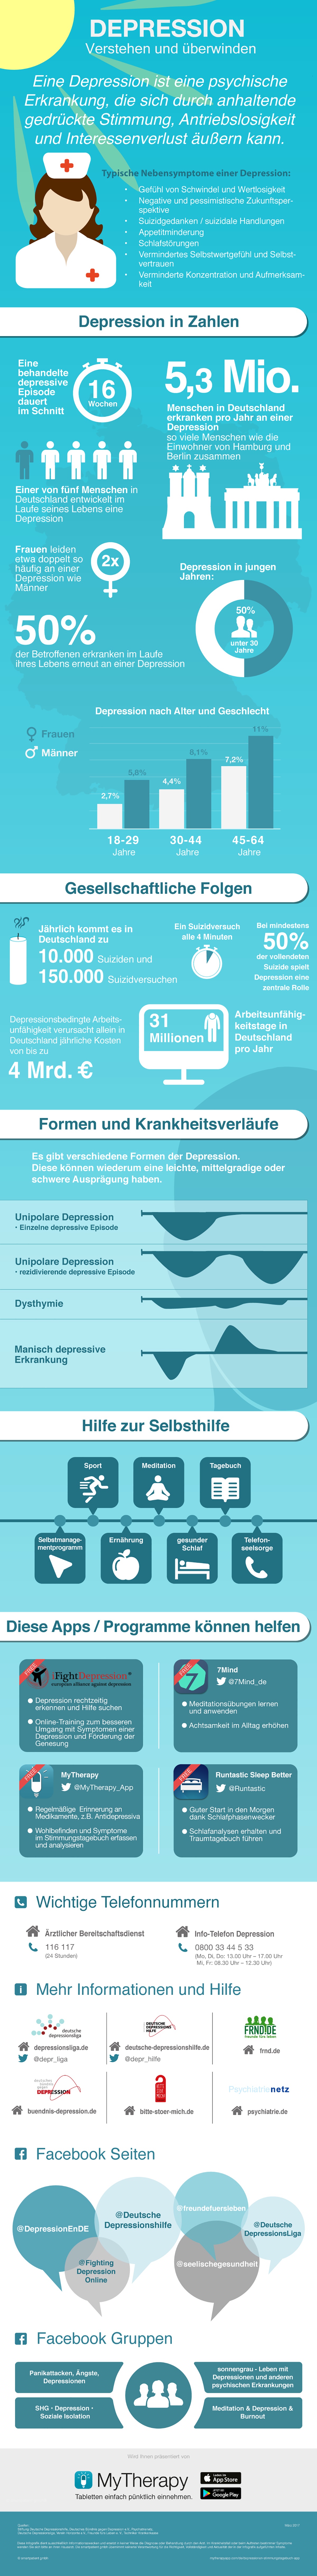 Infografik Depression